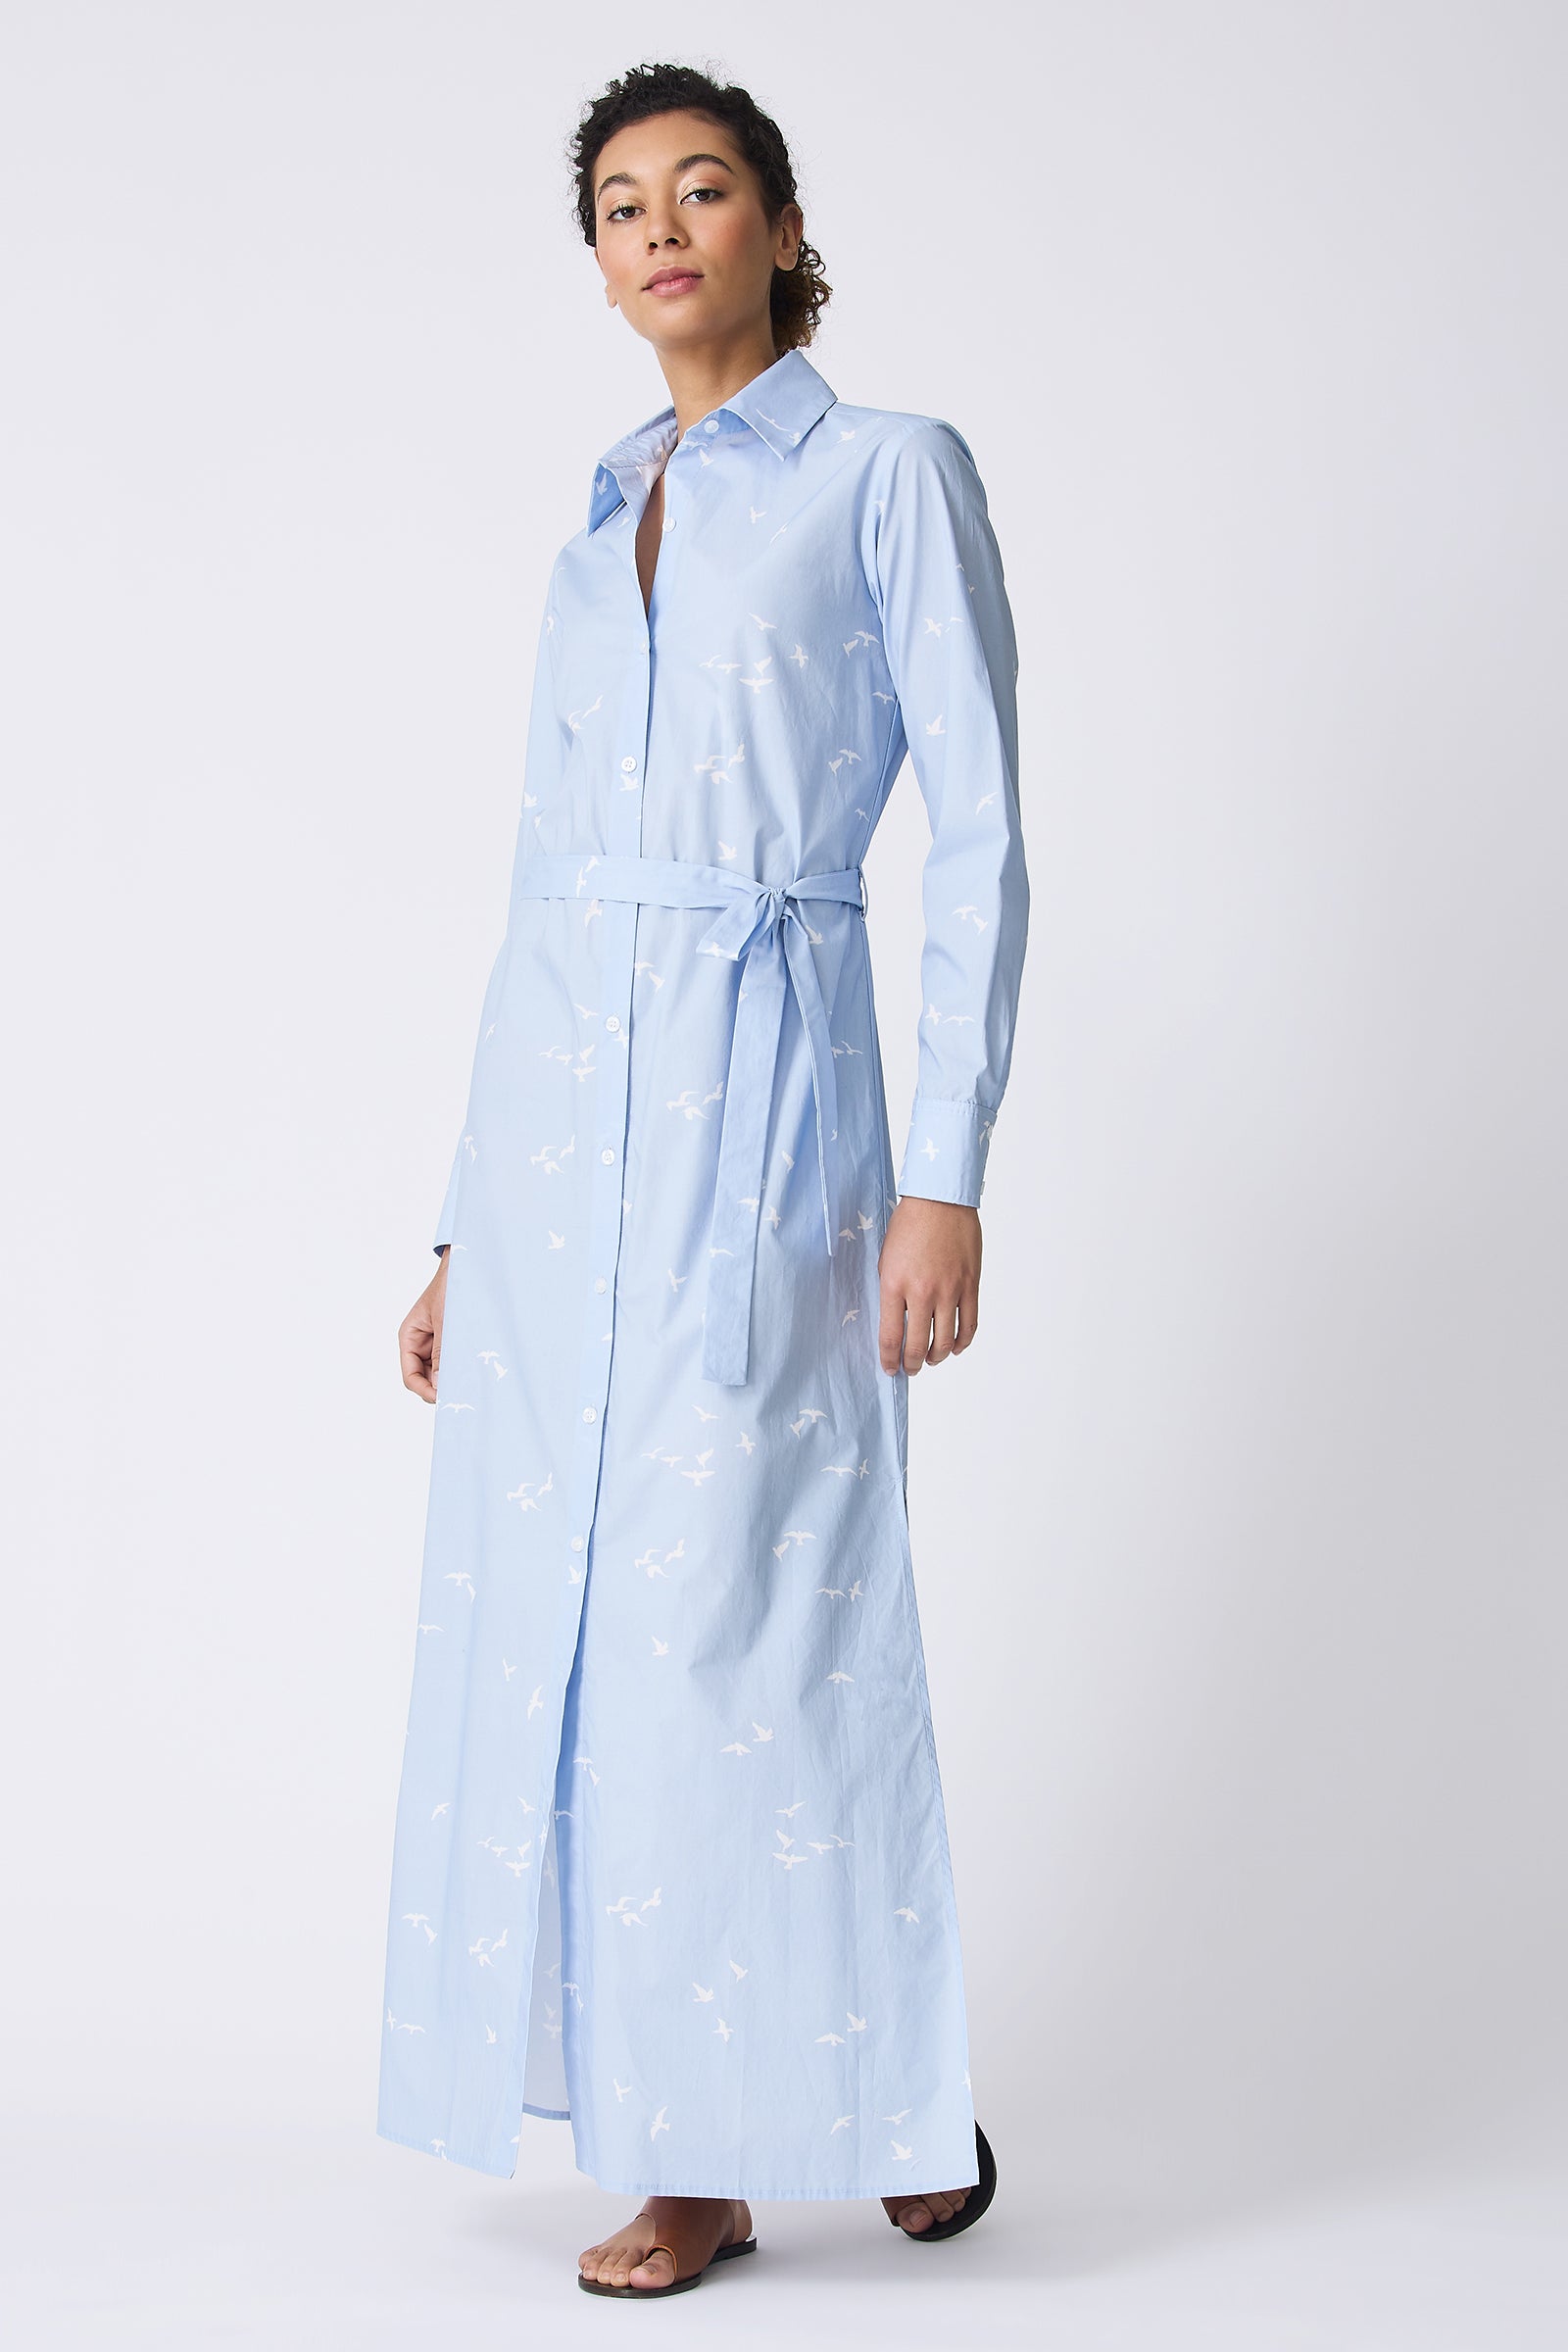 Kal Rieman June Maxi Dress in Oxford Blue Bird Print on model full front view alternate